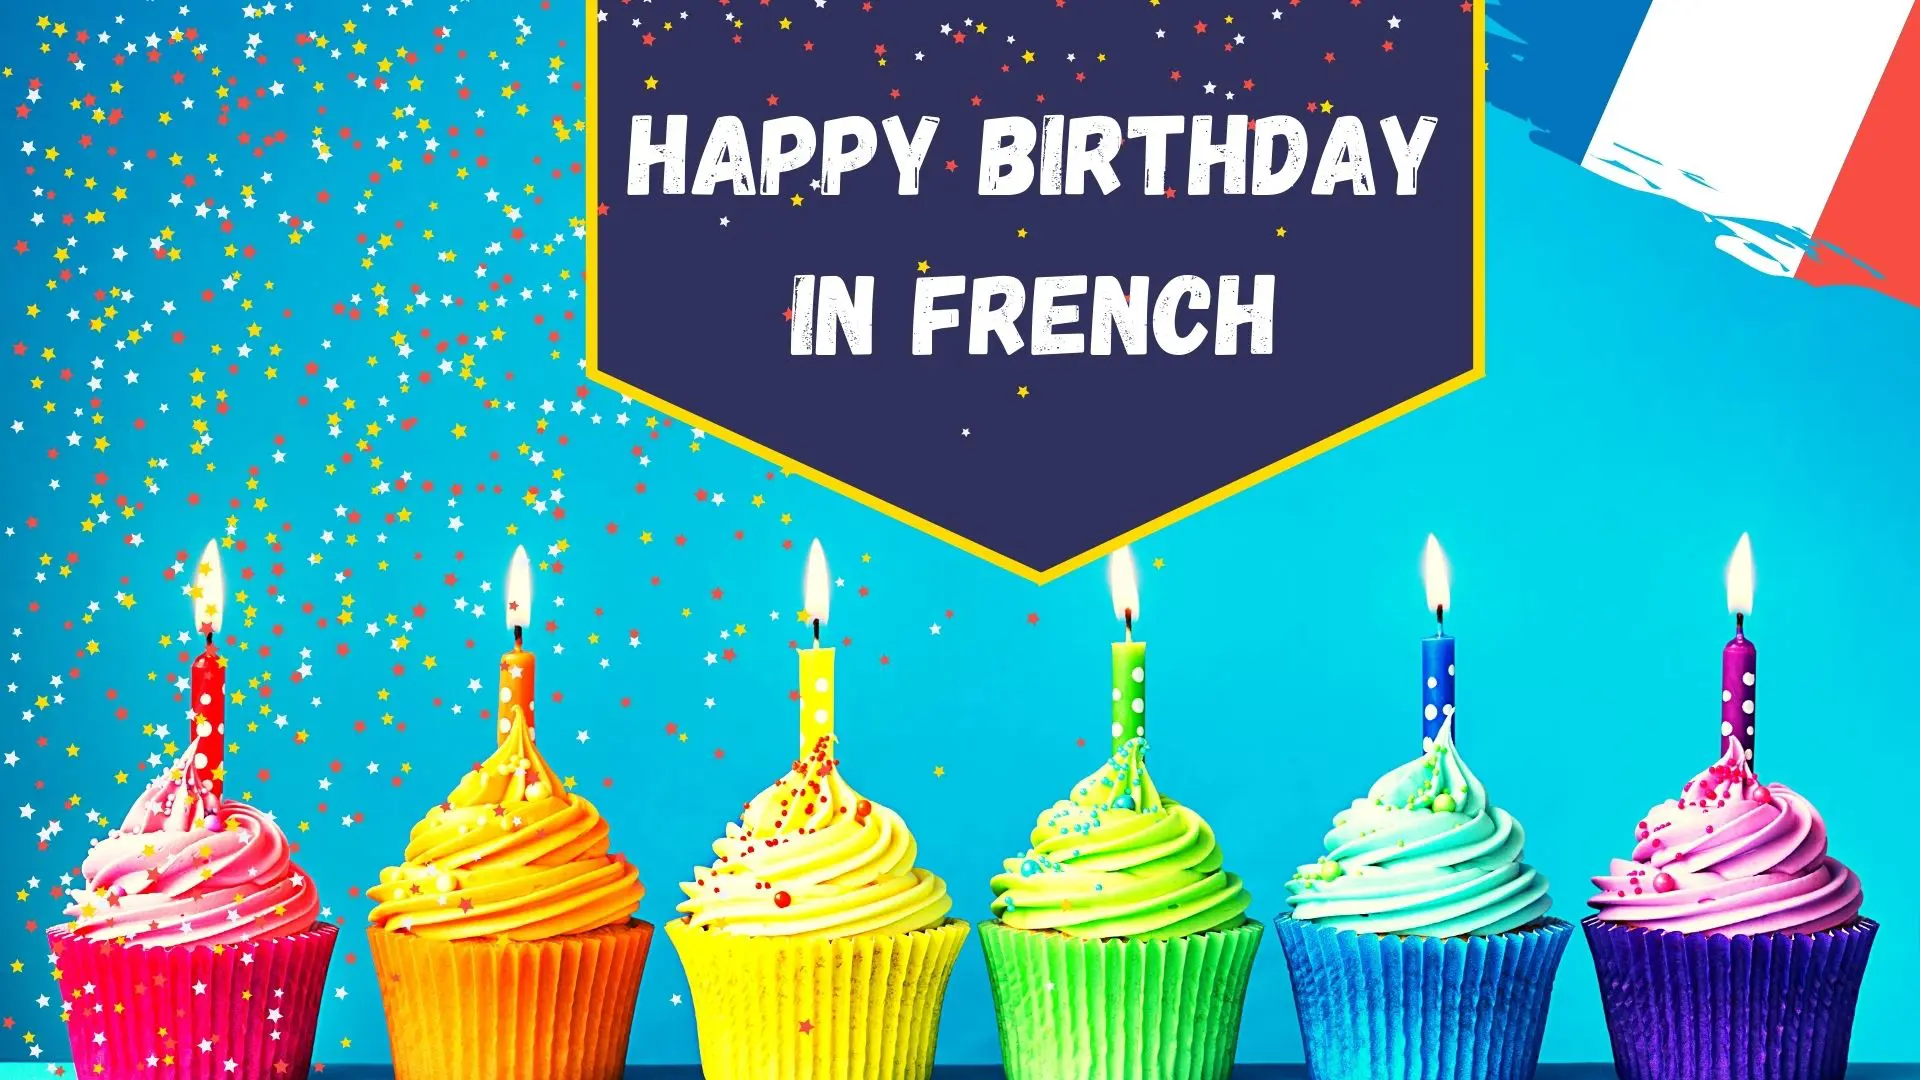 Happy birthday in French